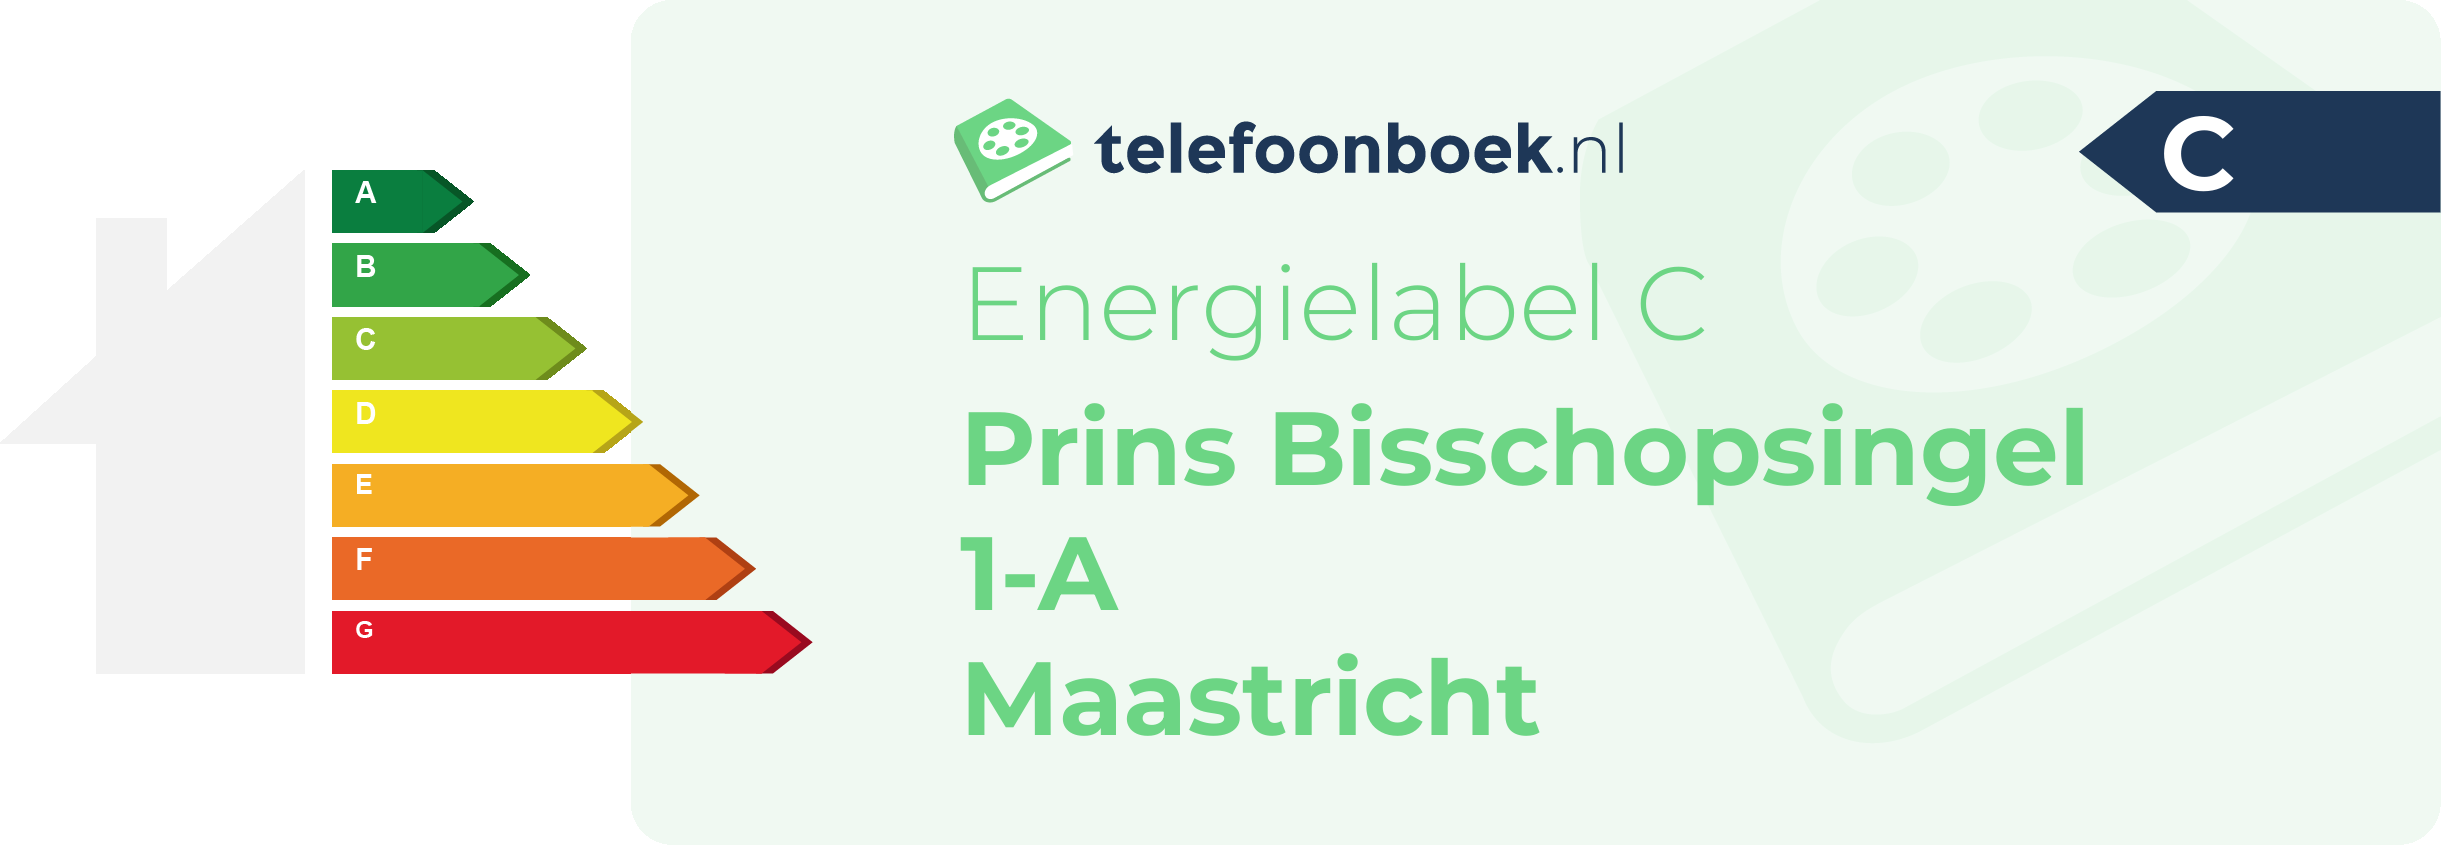 Energielabel Prins Bisschopsingel 1-A Maastricht